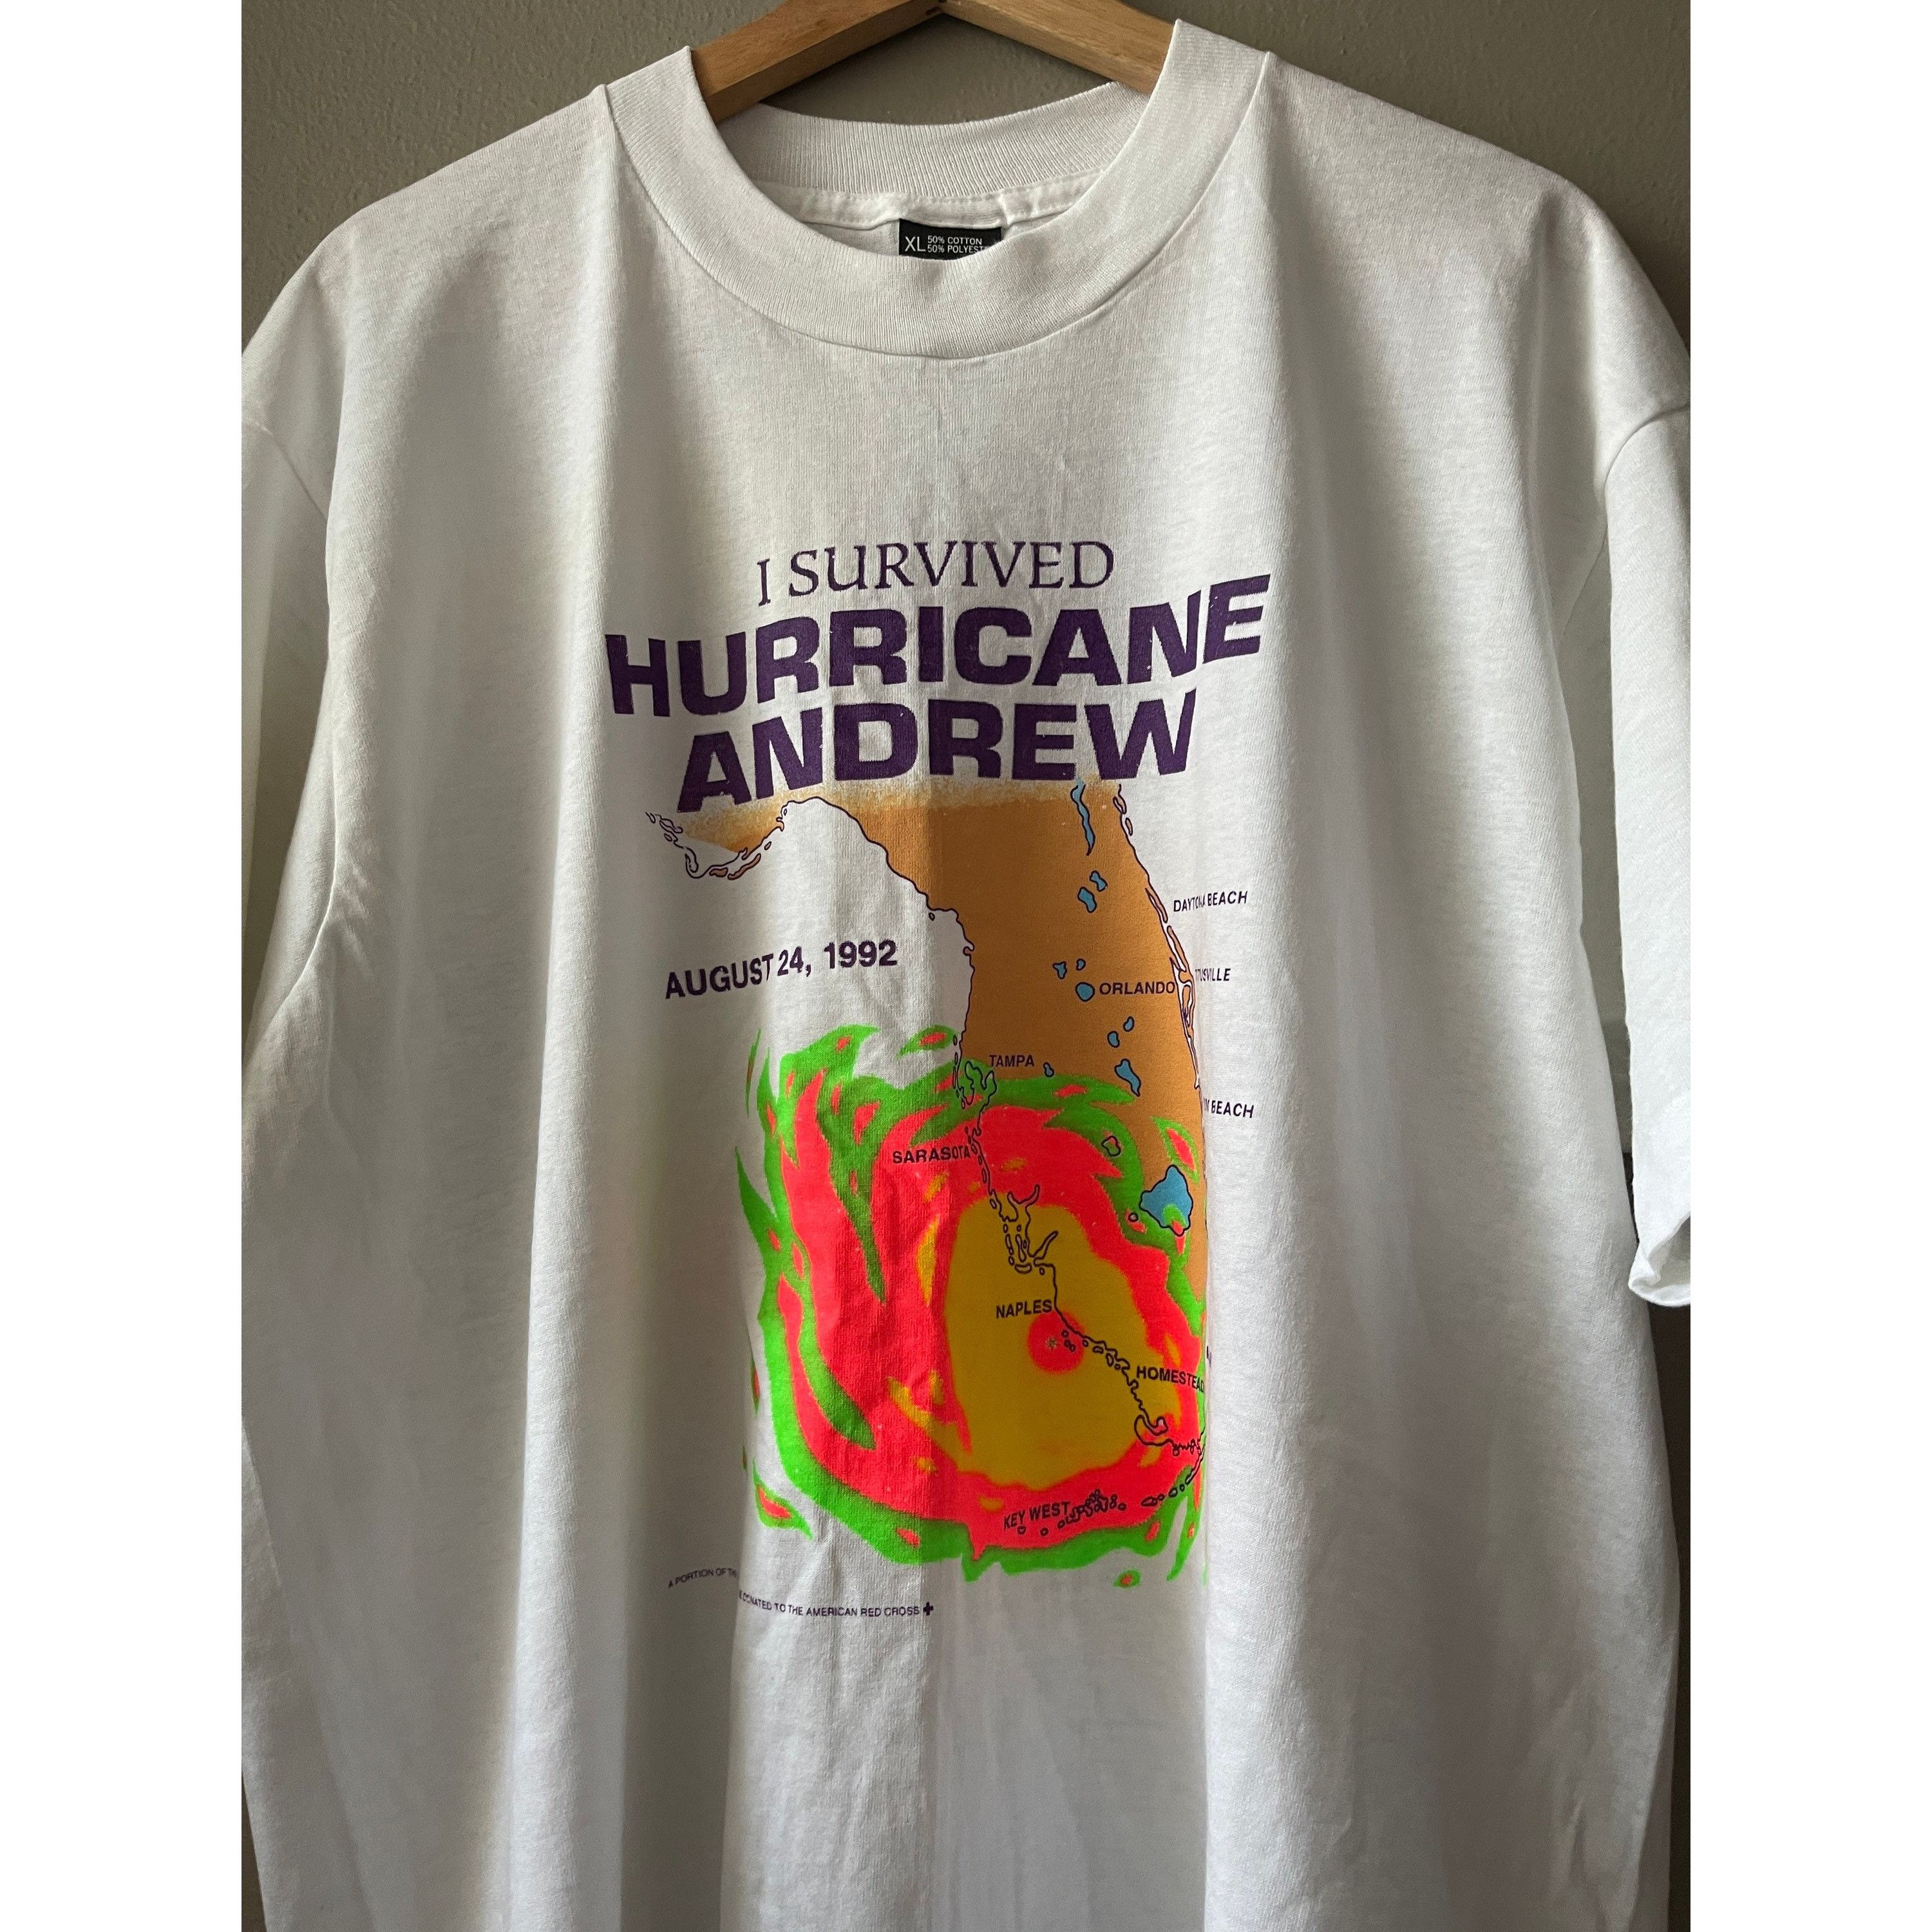 Vintage Vintage 1992 I Survived Hurricane Andrew Single Stitch Tee Size US XL / EU 56 / 4 - 2 Preview